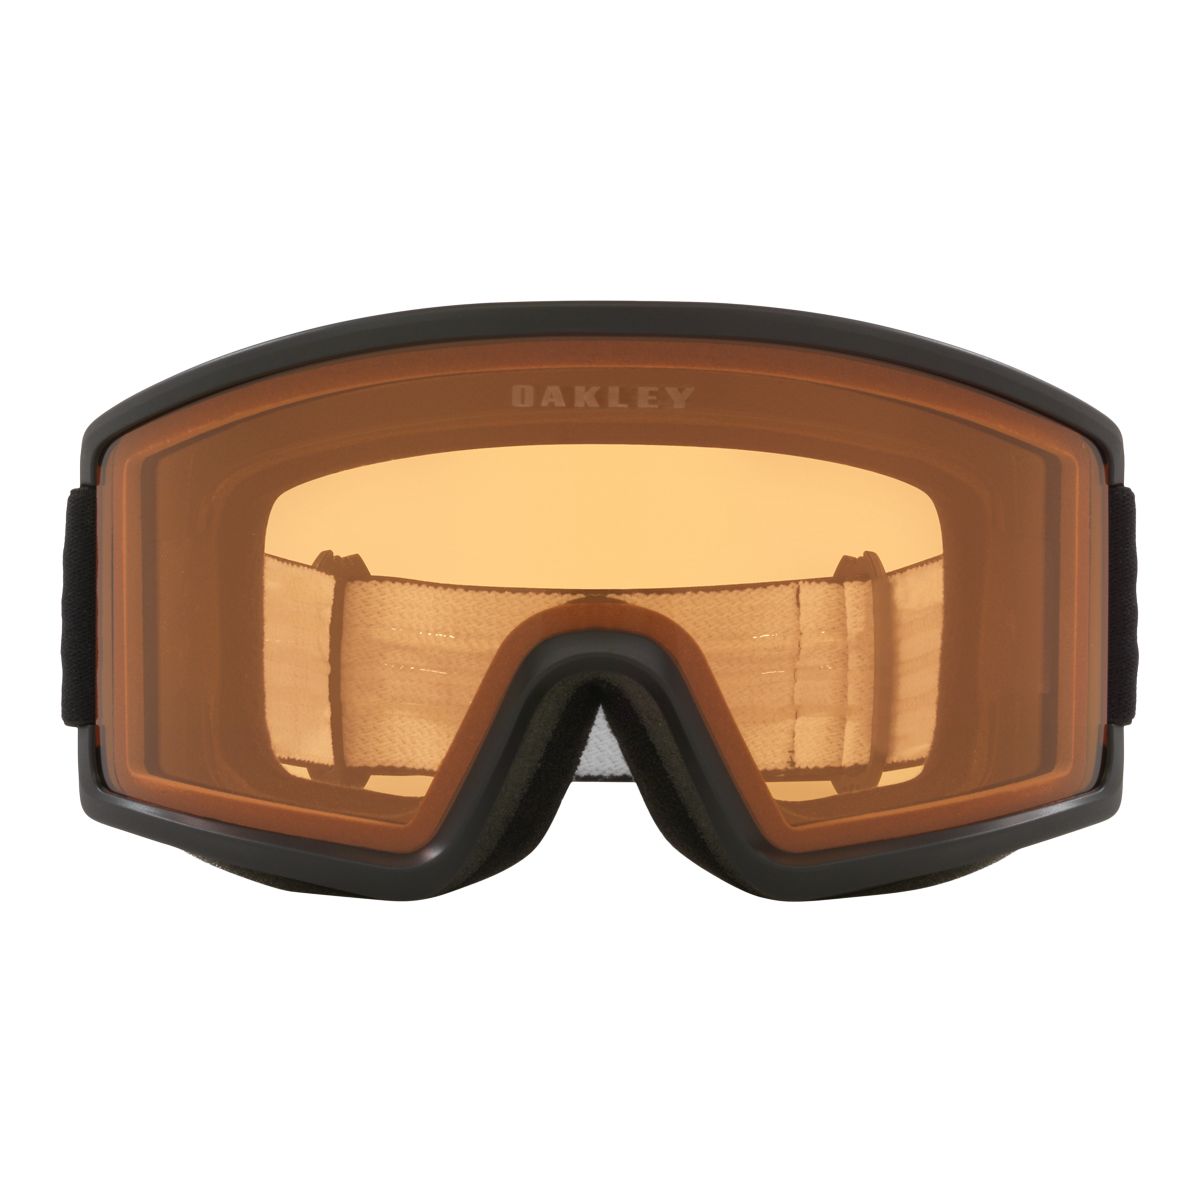 Oakley Target Line L Ski & Snowboard Goggles 2021/22 - Matte Black